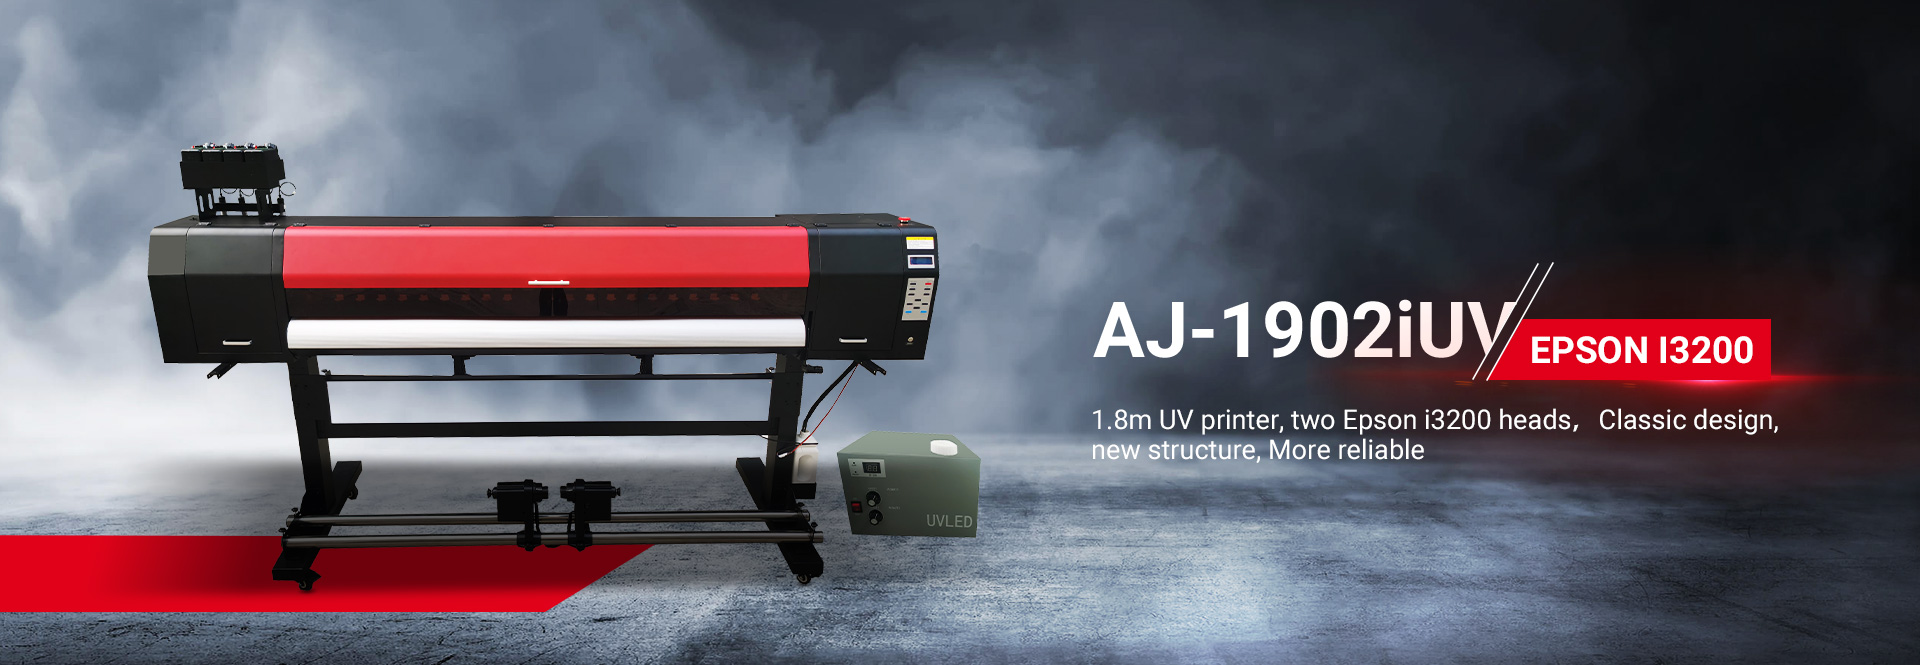 Armyjet uv roll printer လှိမ့်ရန်- ပို၍စိတ်ချရသည်။